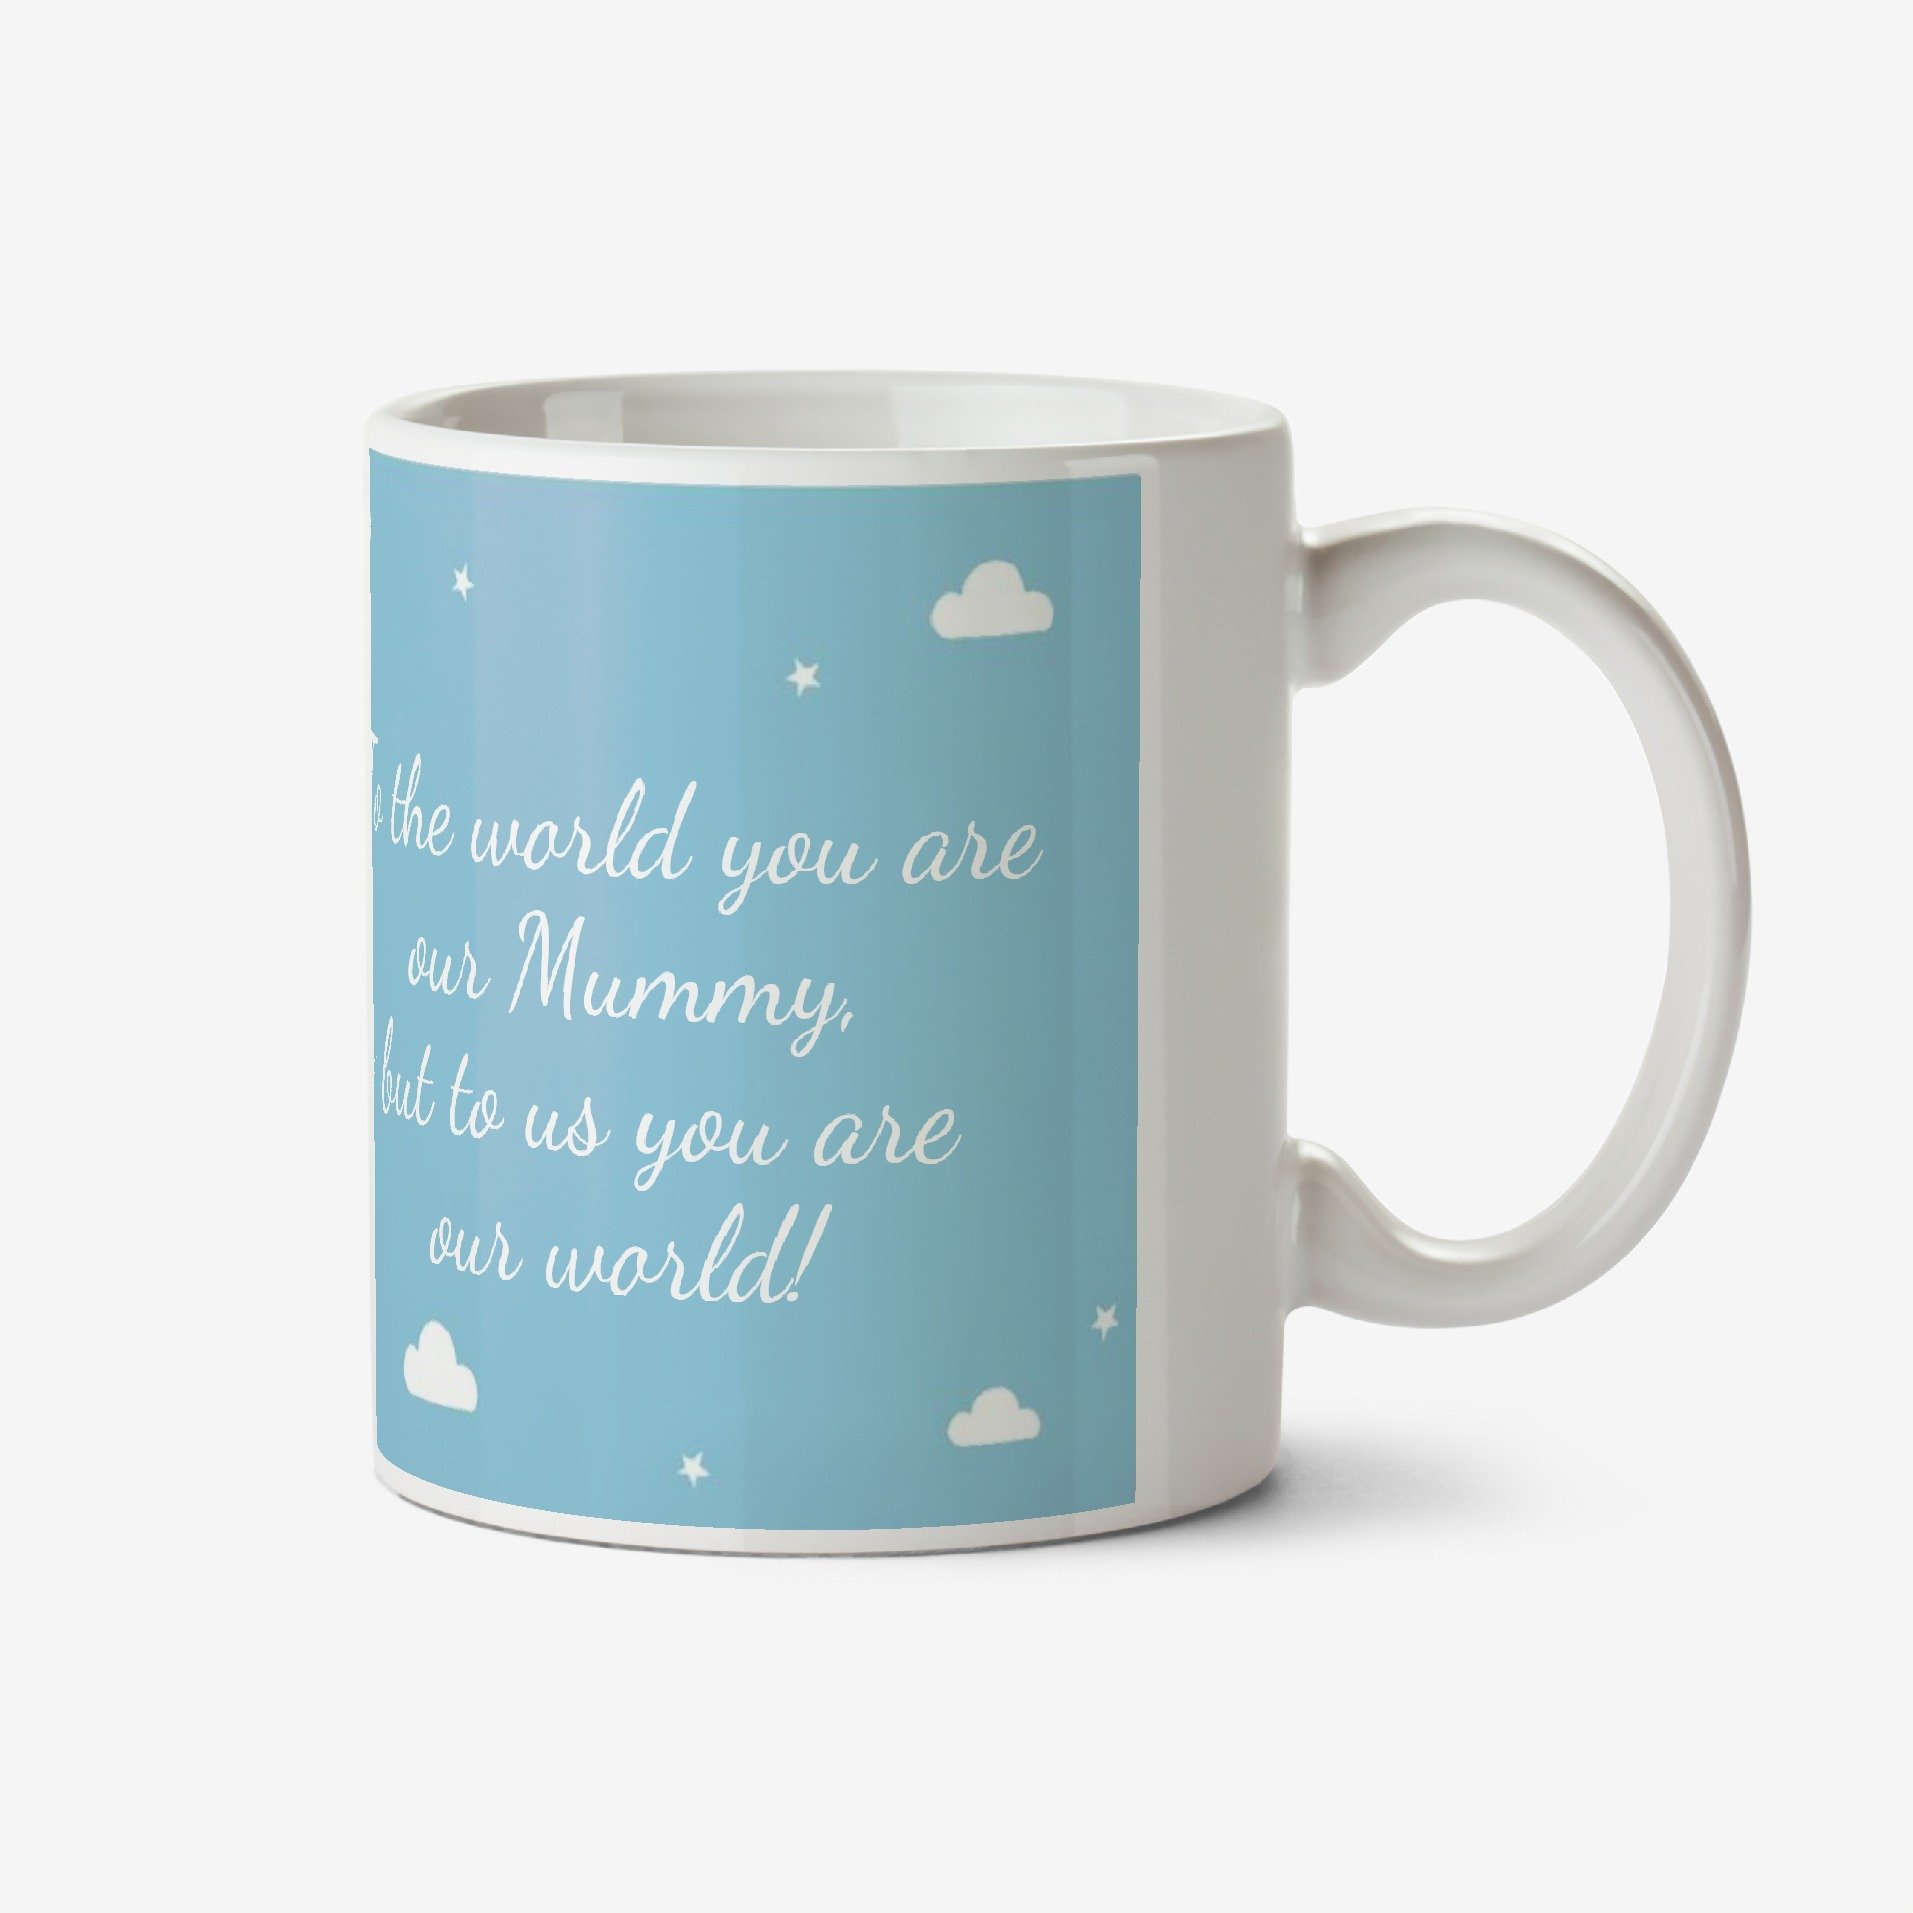 Moonpig To Us Your Are Our World Clouds In Sky Design Mug Ceramic Mug